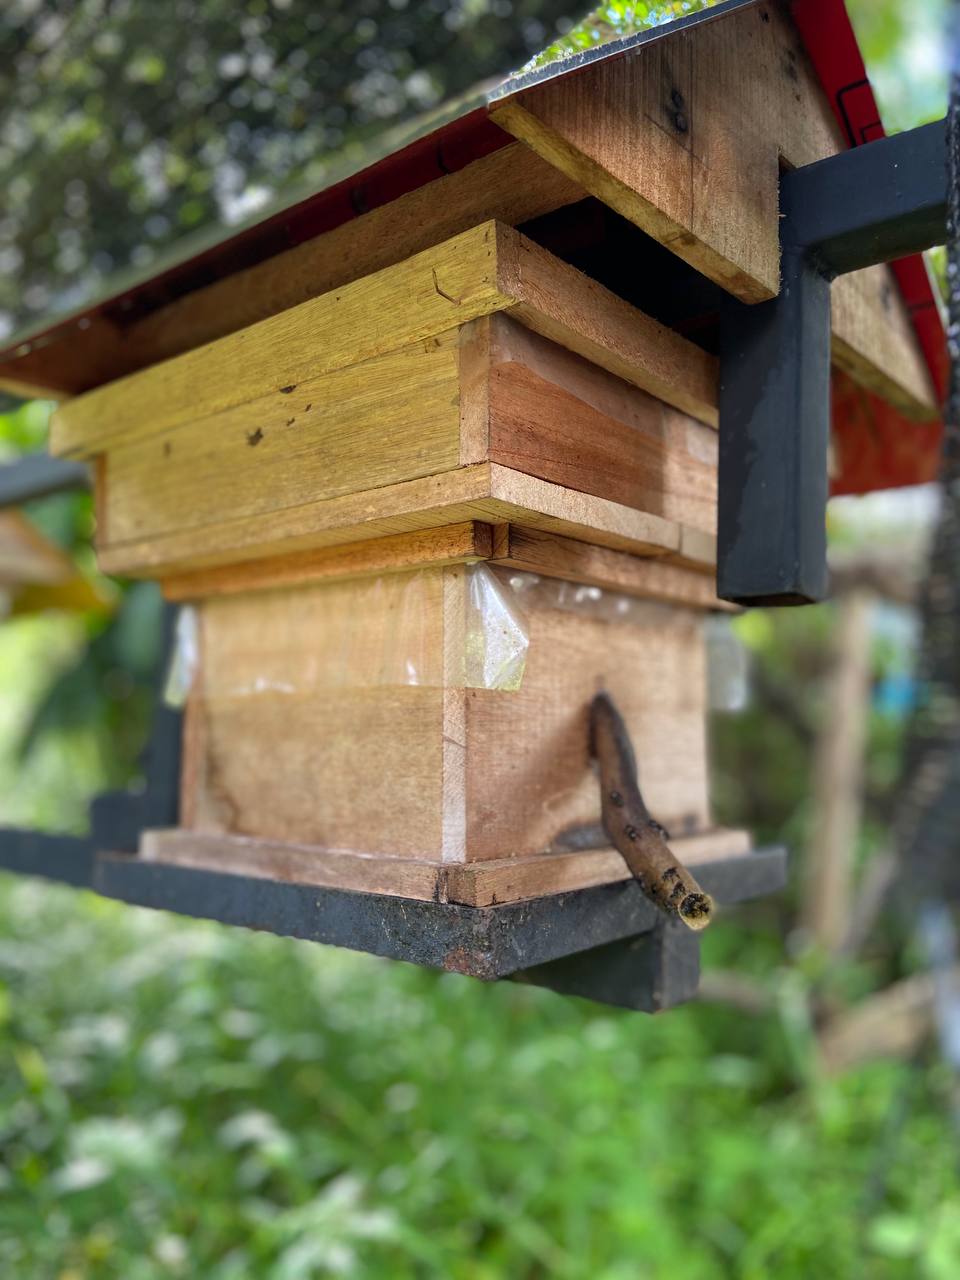 Bayu Kelulut Stingless Bee Honey 100g